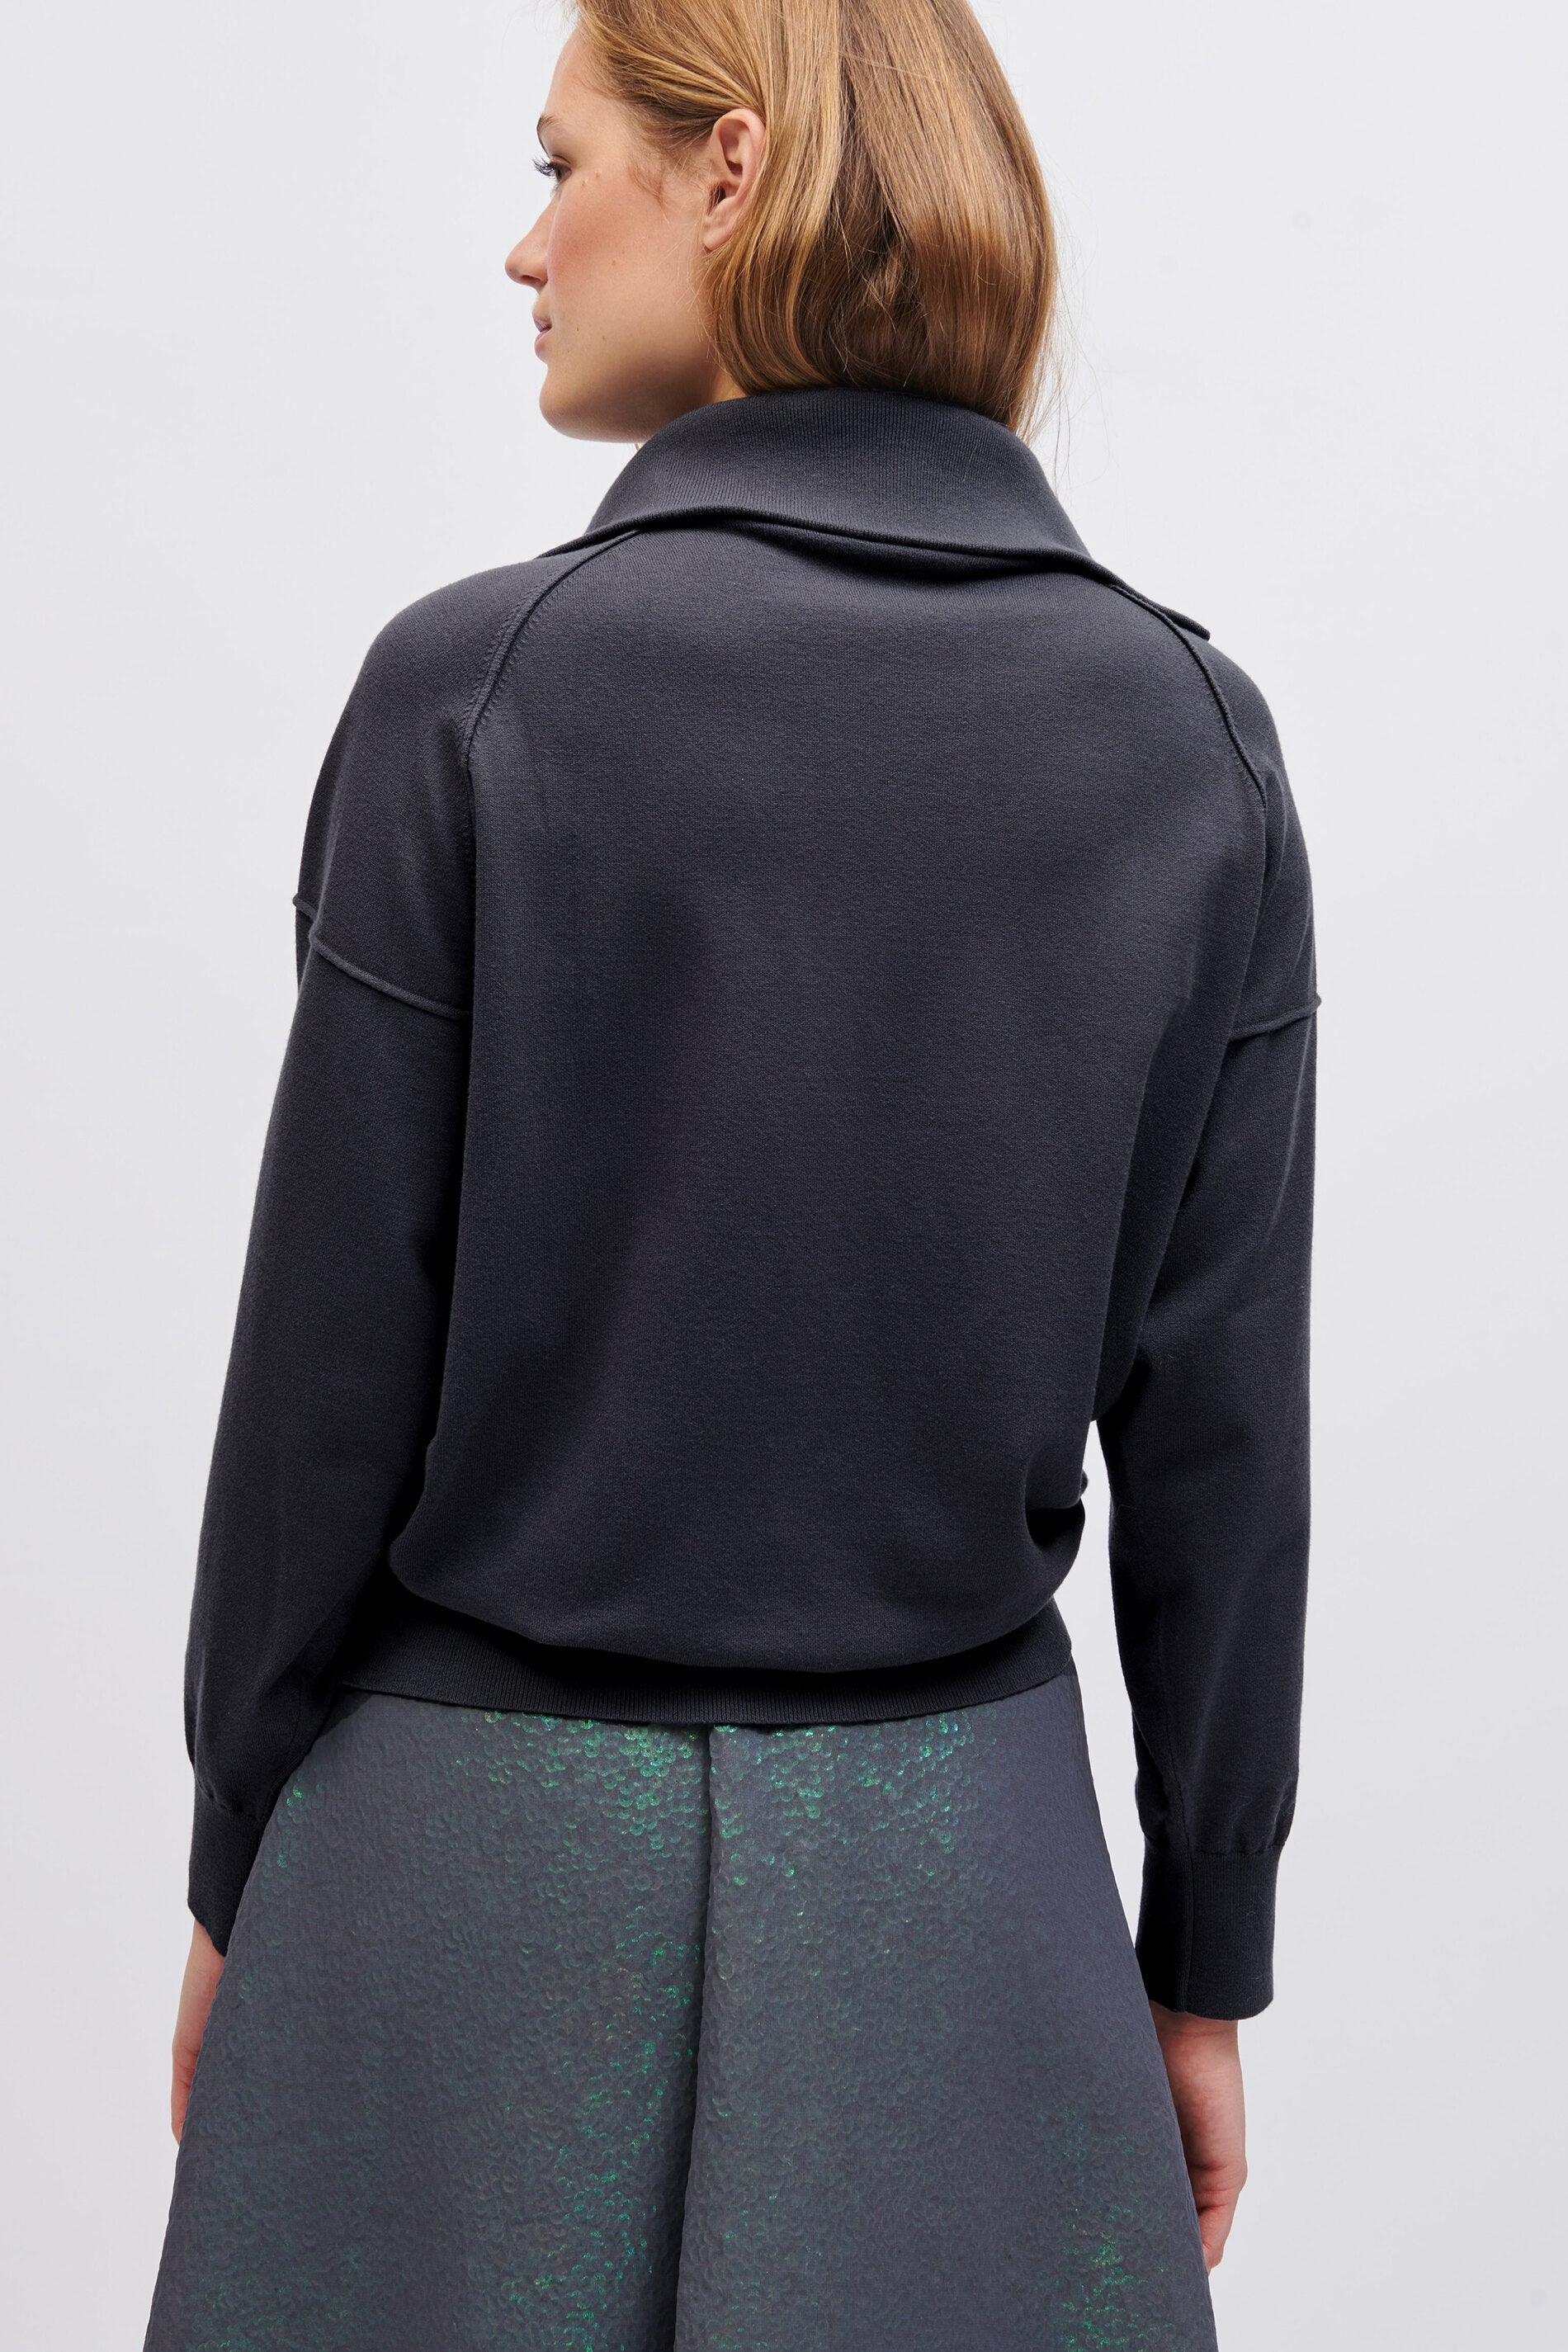 LUISA CERANO-OUTLET-SALE-Pullover mit Sweatdetails-Strick-by-ARCHIVIST